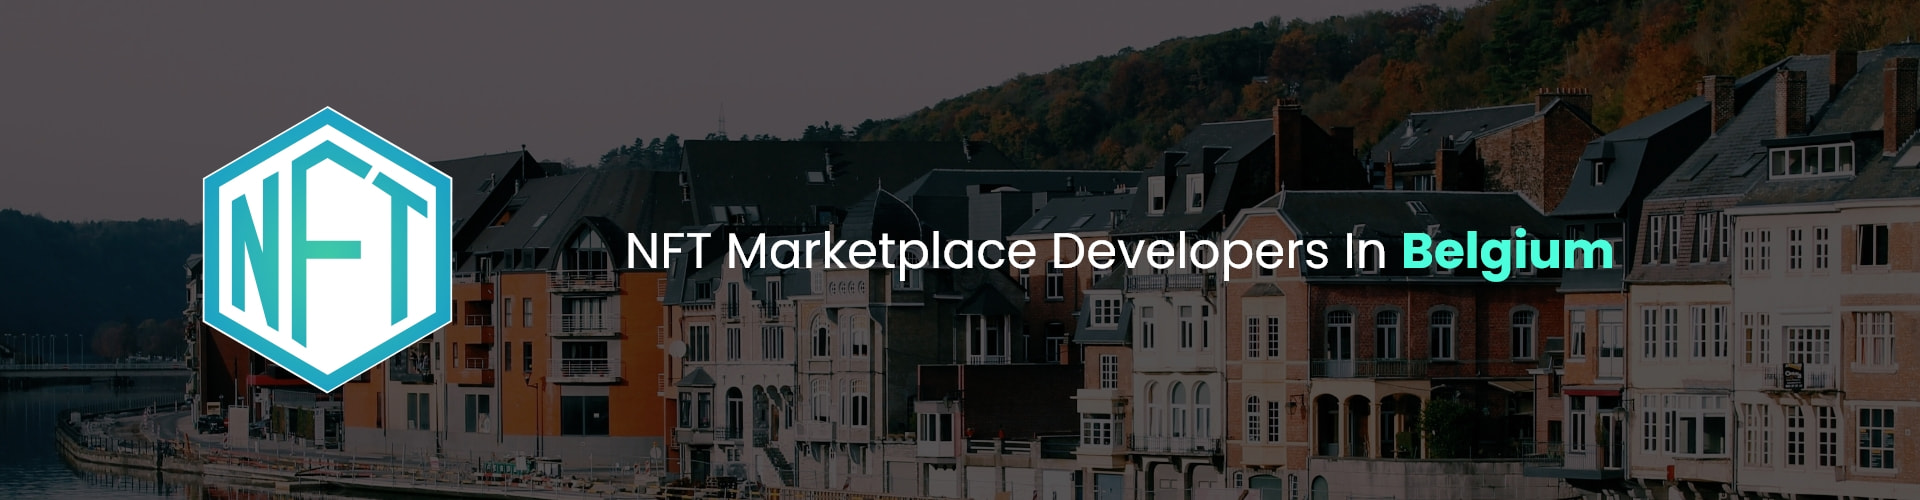   hire nft marketplace developers in Belgium